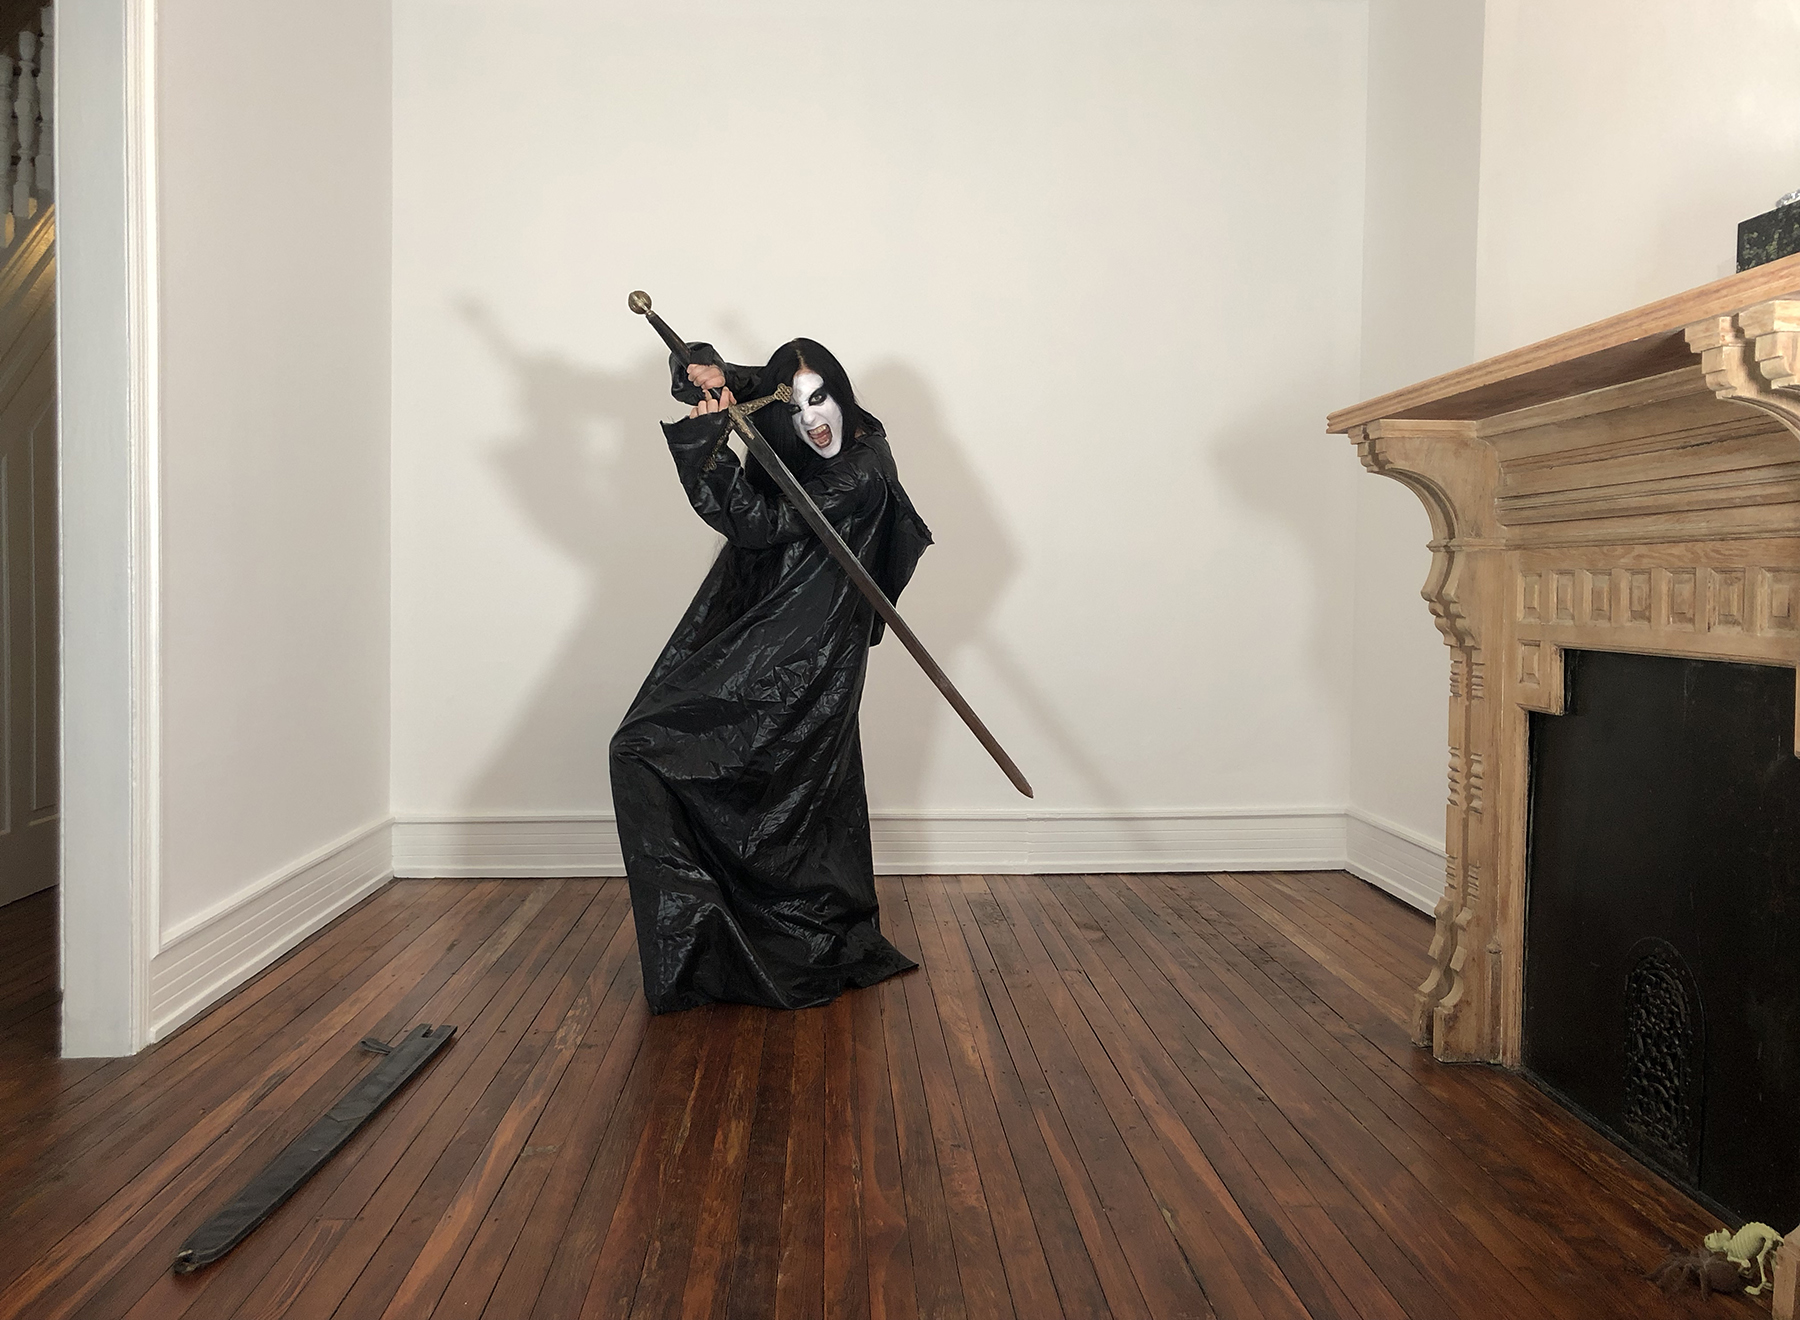 Black Metal from Sword Performance, 2019